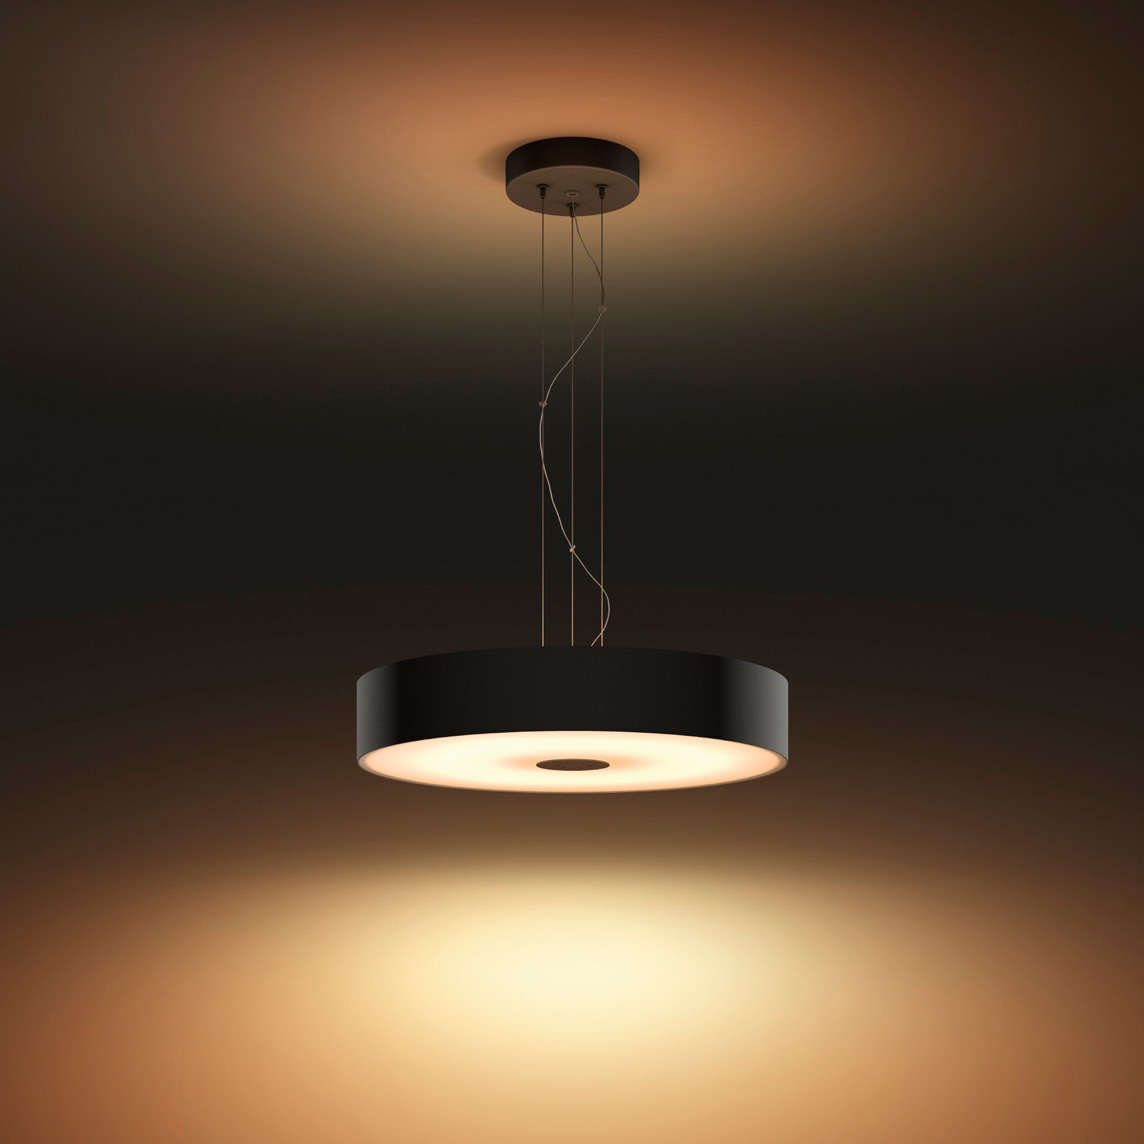 Lampa pendul Philips Hue alb Ambiance Fair LED Light negru 2900lm incl. Buton Dimmer